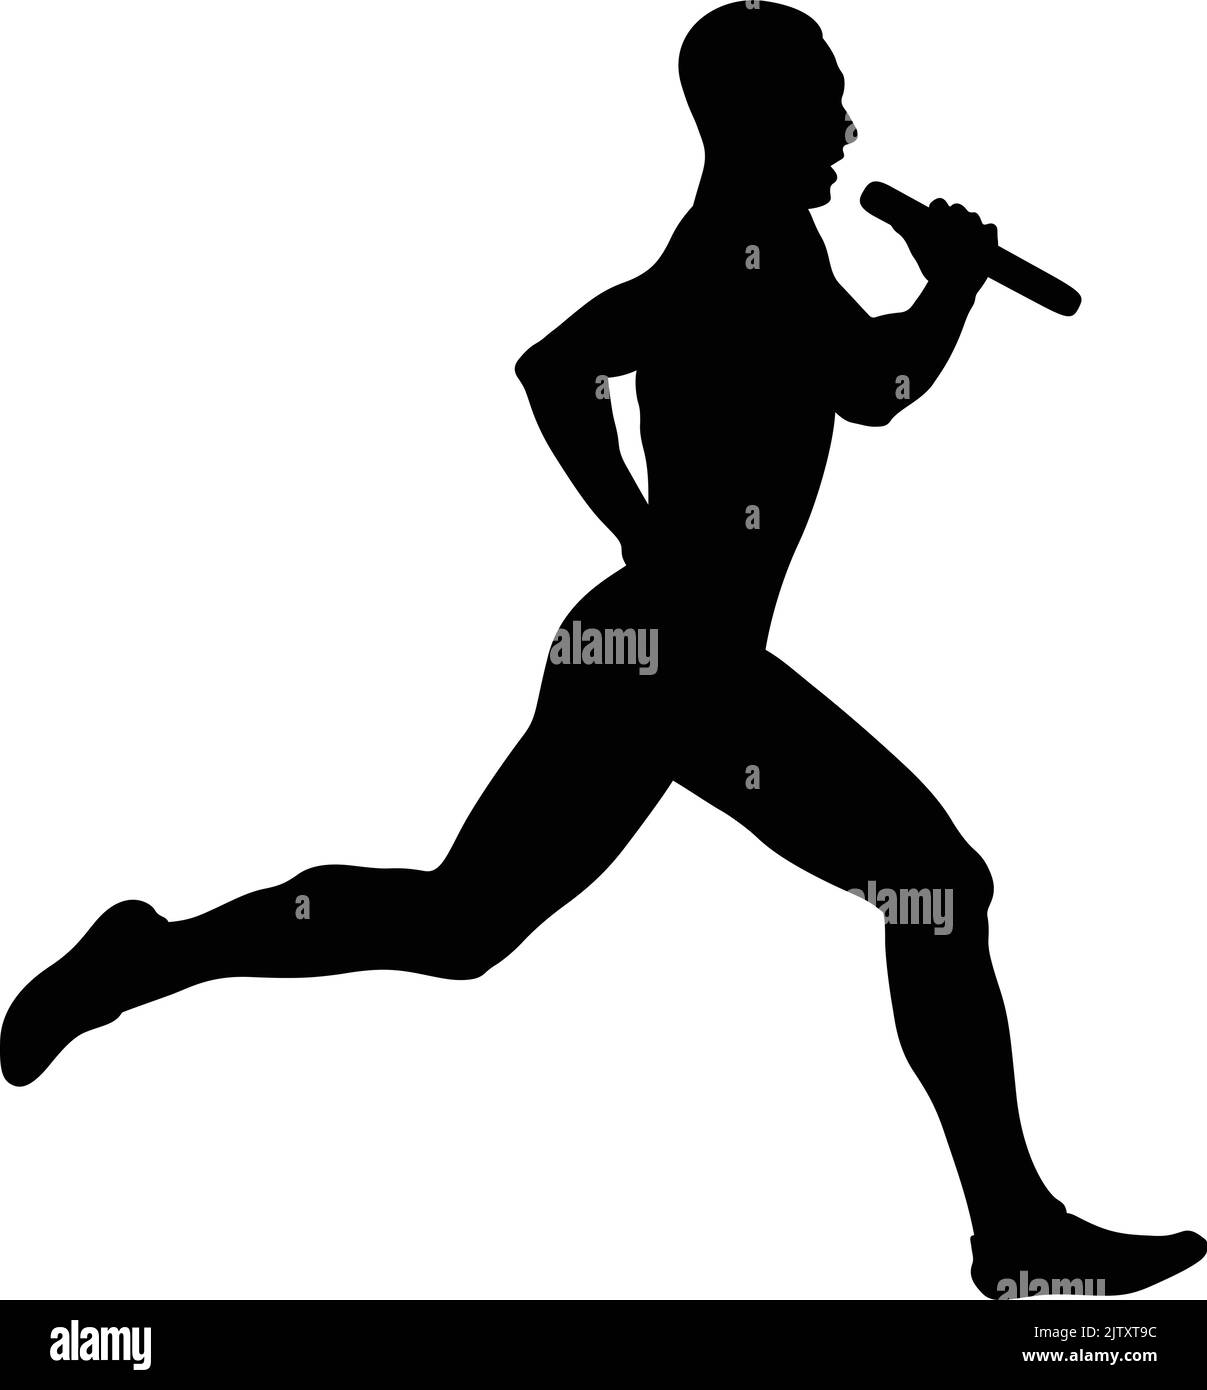 male runner with baton run relay race black silhouette Stock Vector